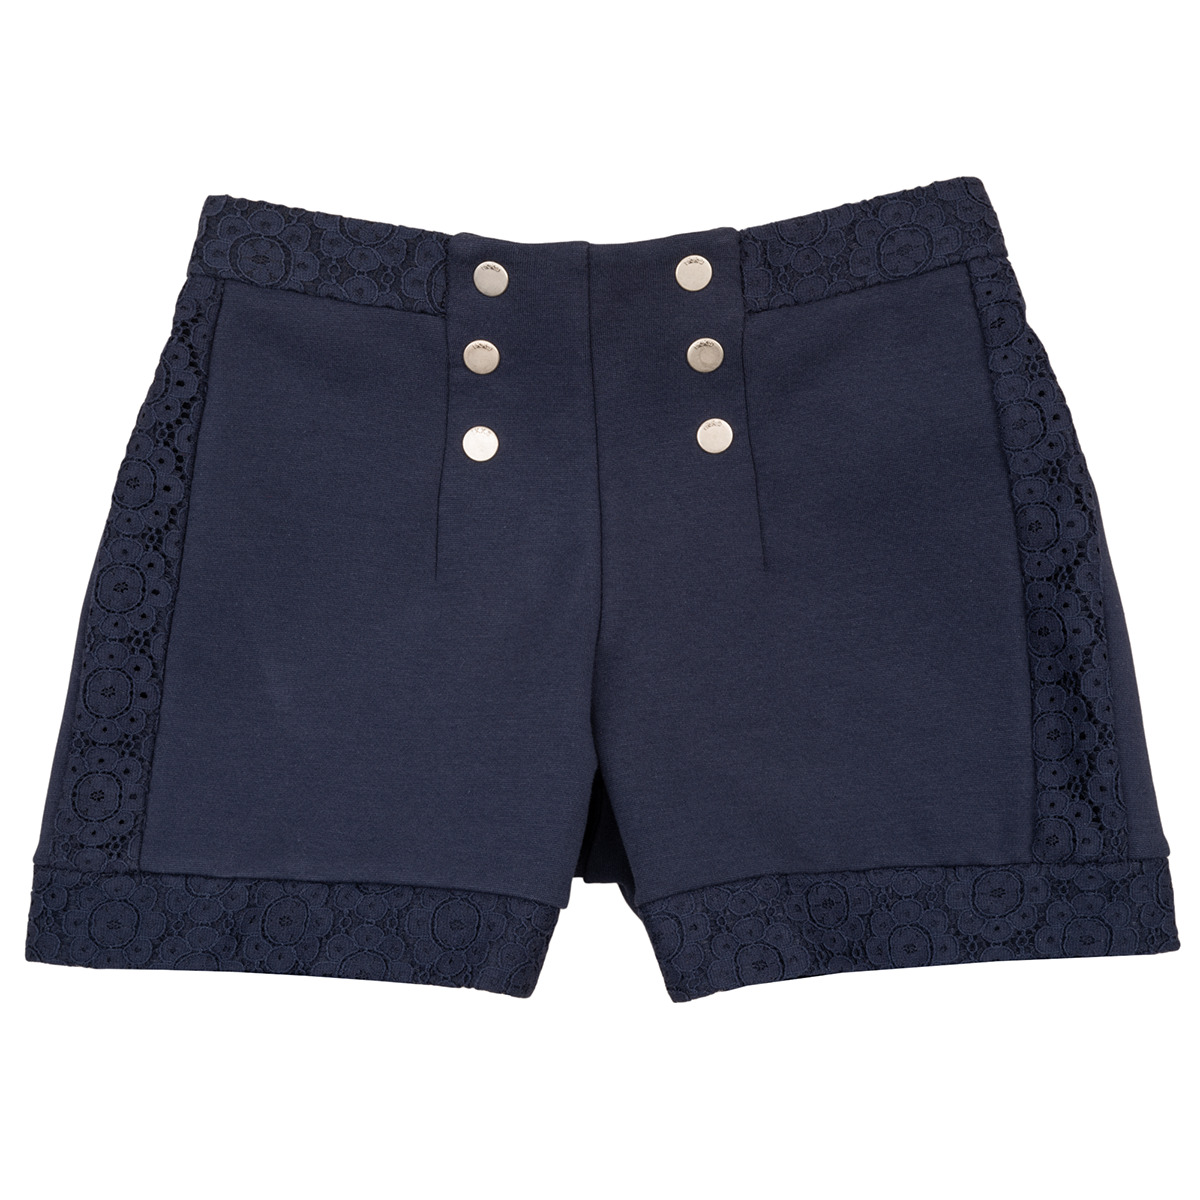 Textil Rapariga polo Shorts / Bermudas Ikks SOLISSO Marinho